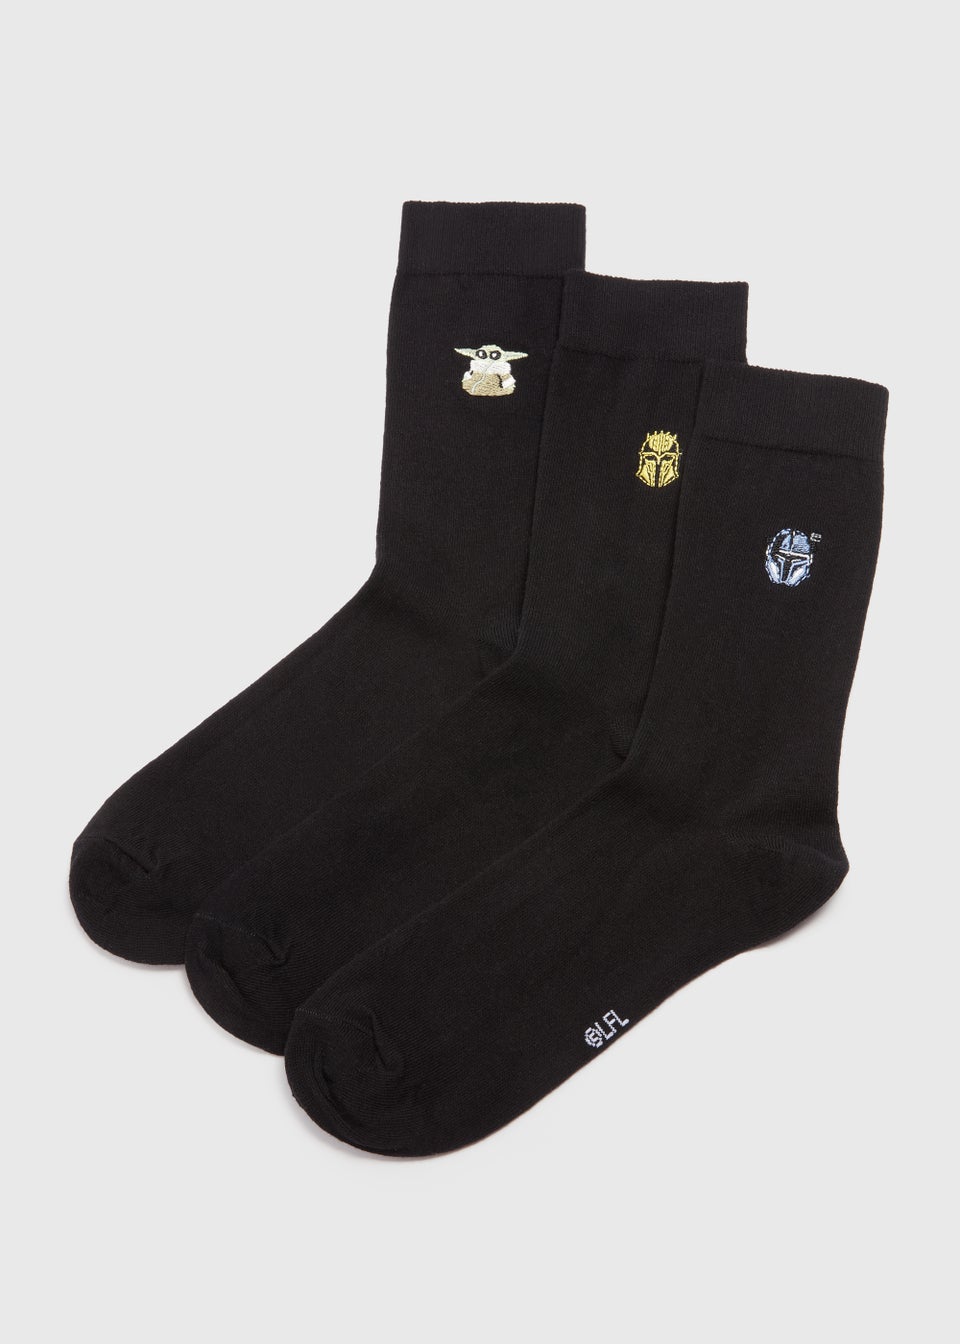 3 Pack Black Star Wars Embroidered Socks